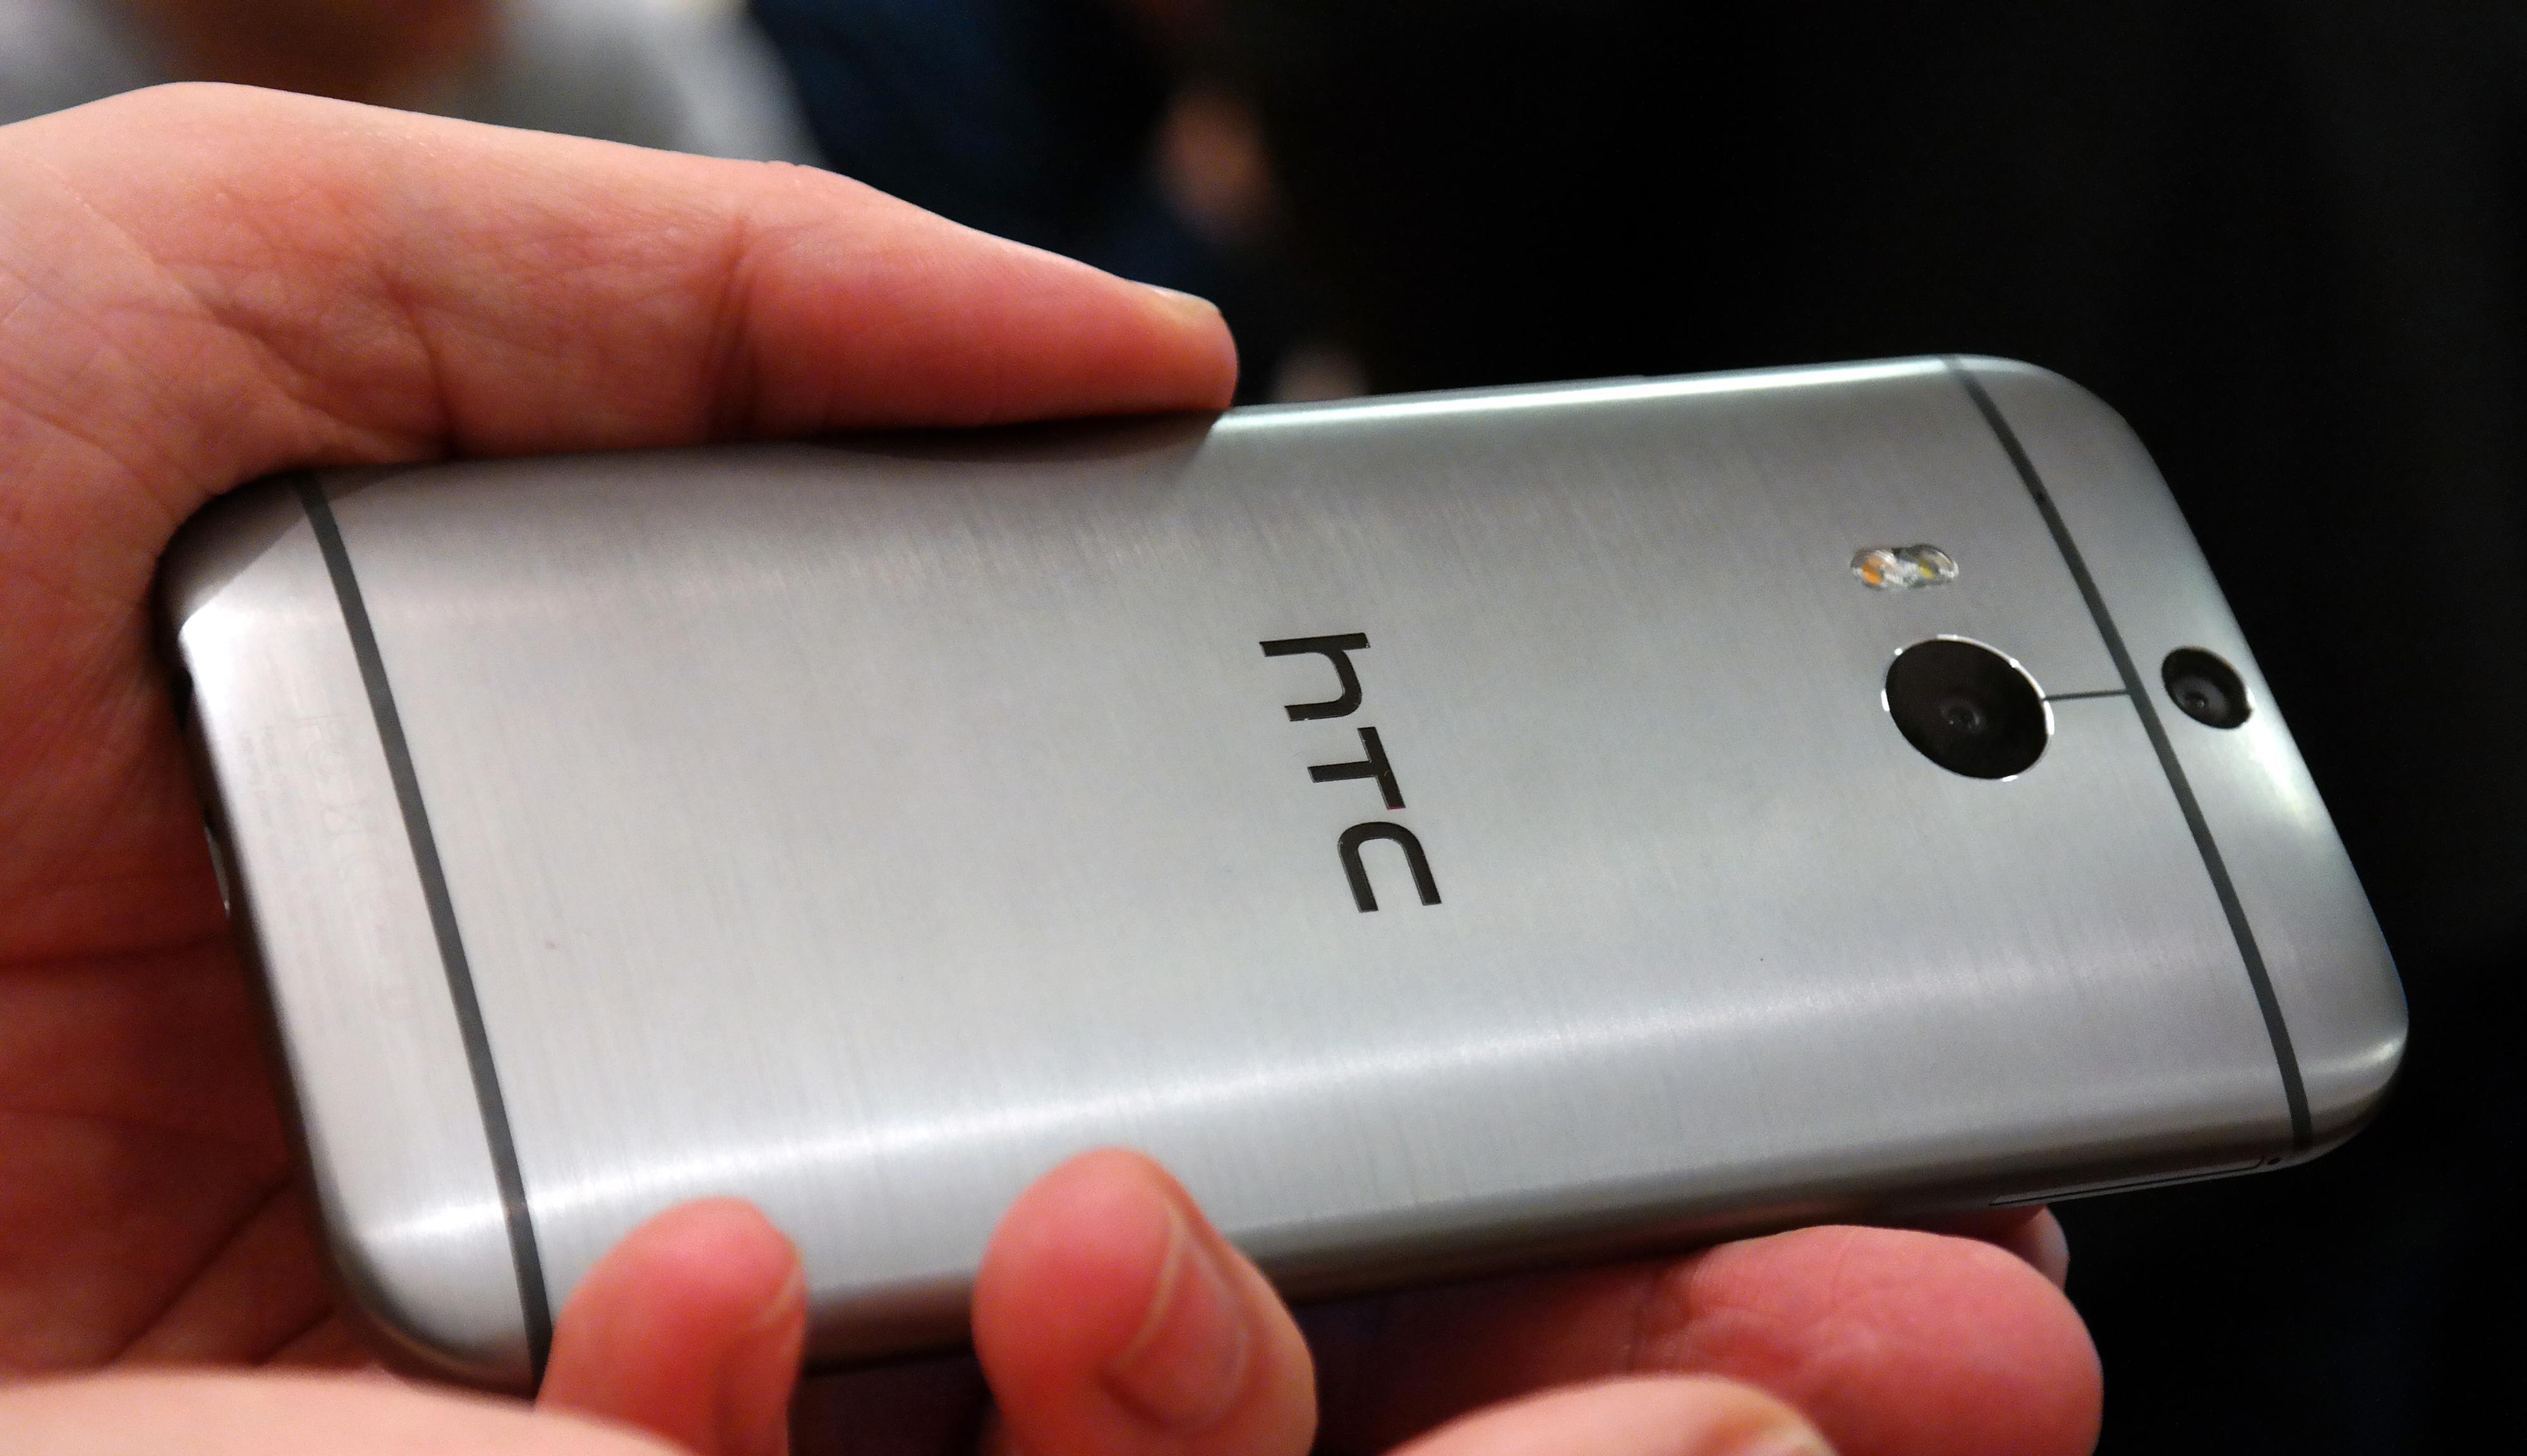 HTC One (M8) er en lekker mobiltelefon i metall.Foto: Espen Irwing Swang, Amobil.no